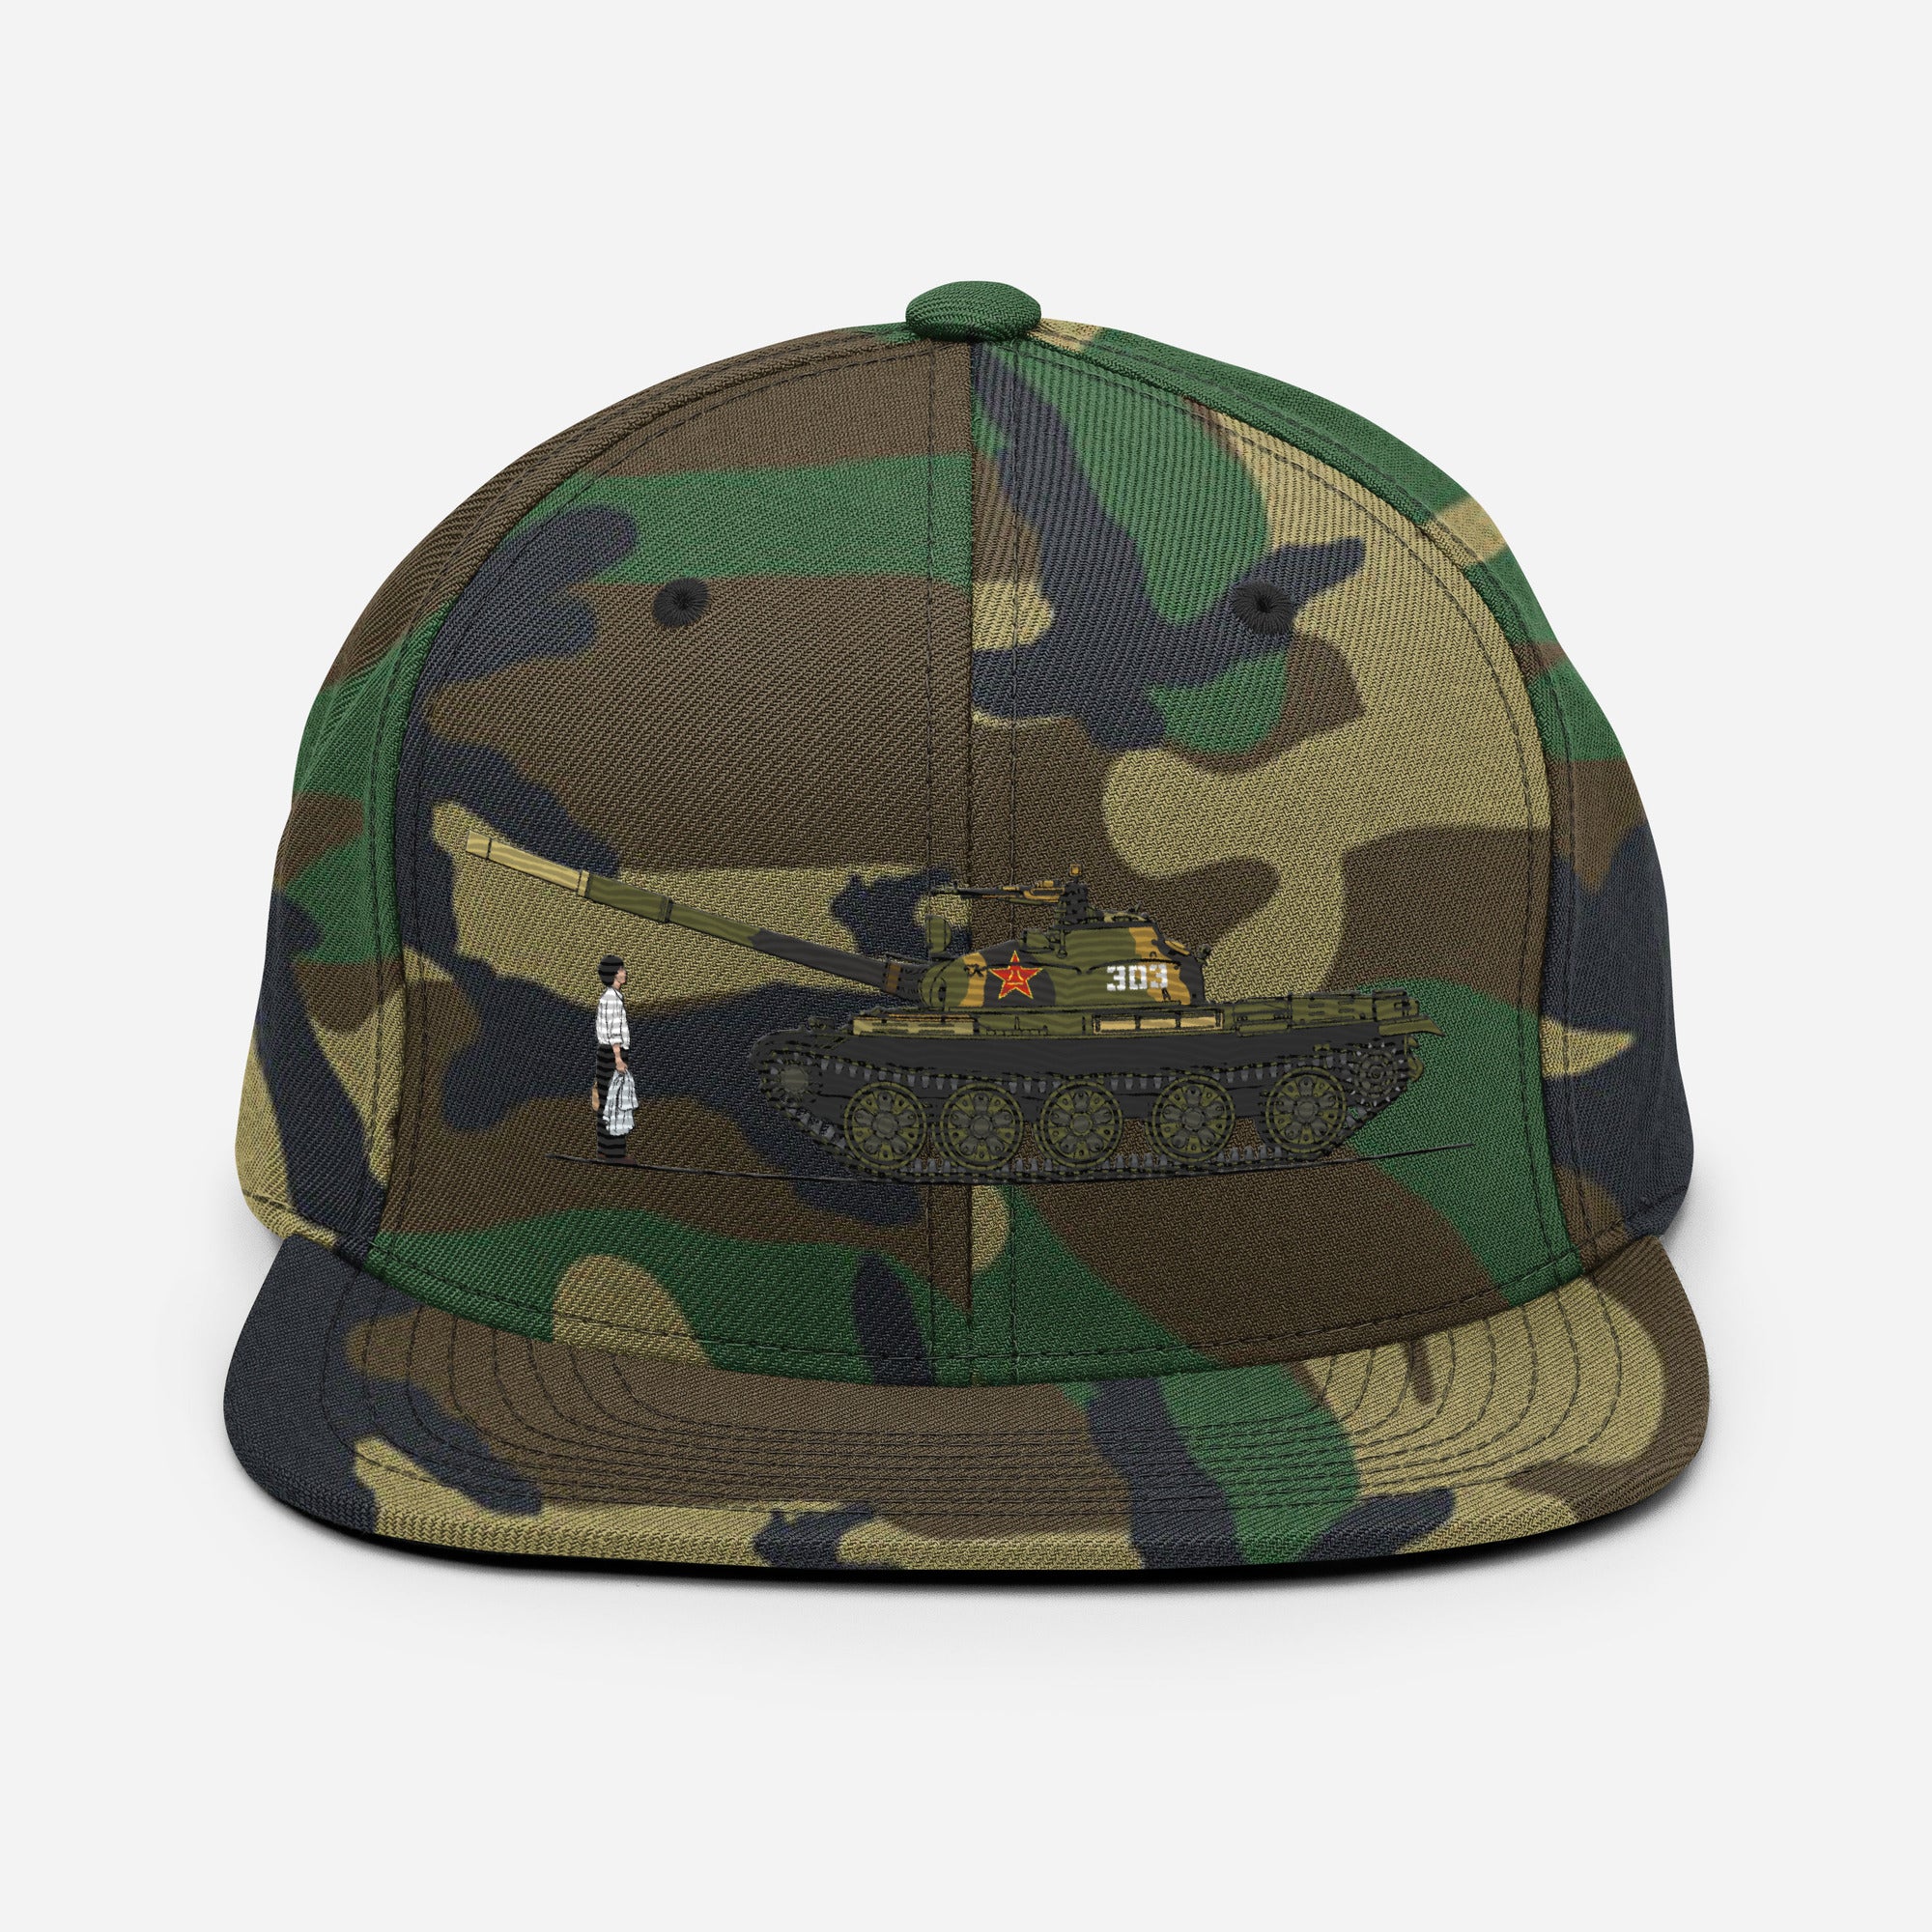 Tiananmen Tank Man Snapback Embroidered Hat